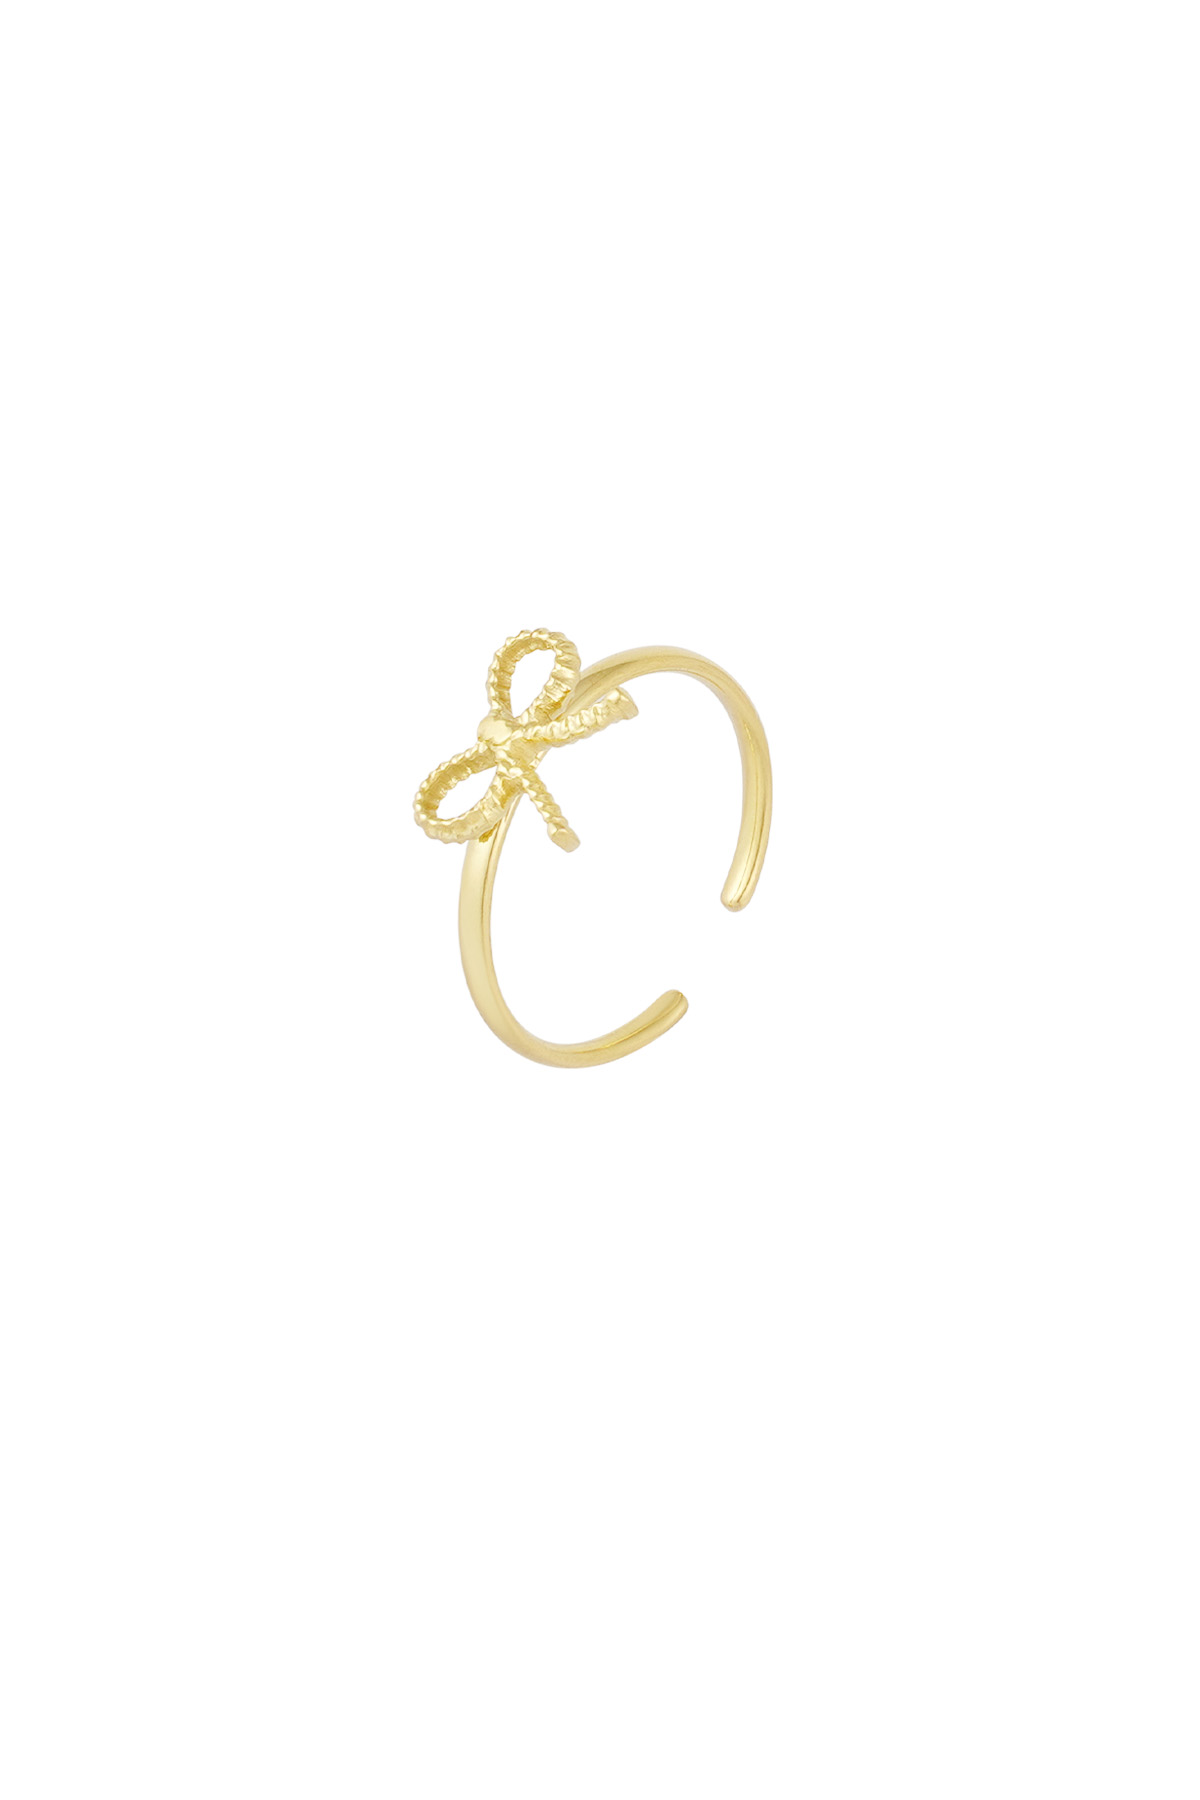 Ring bow basic - goud h5 